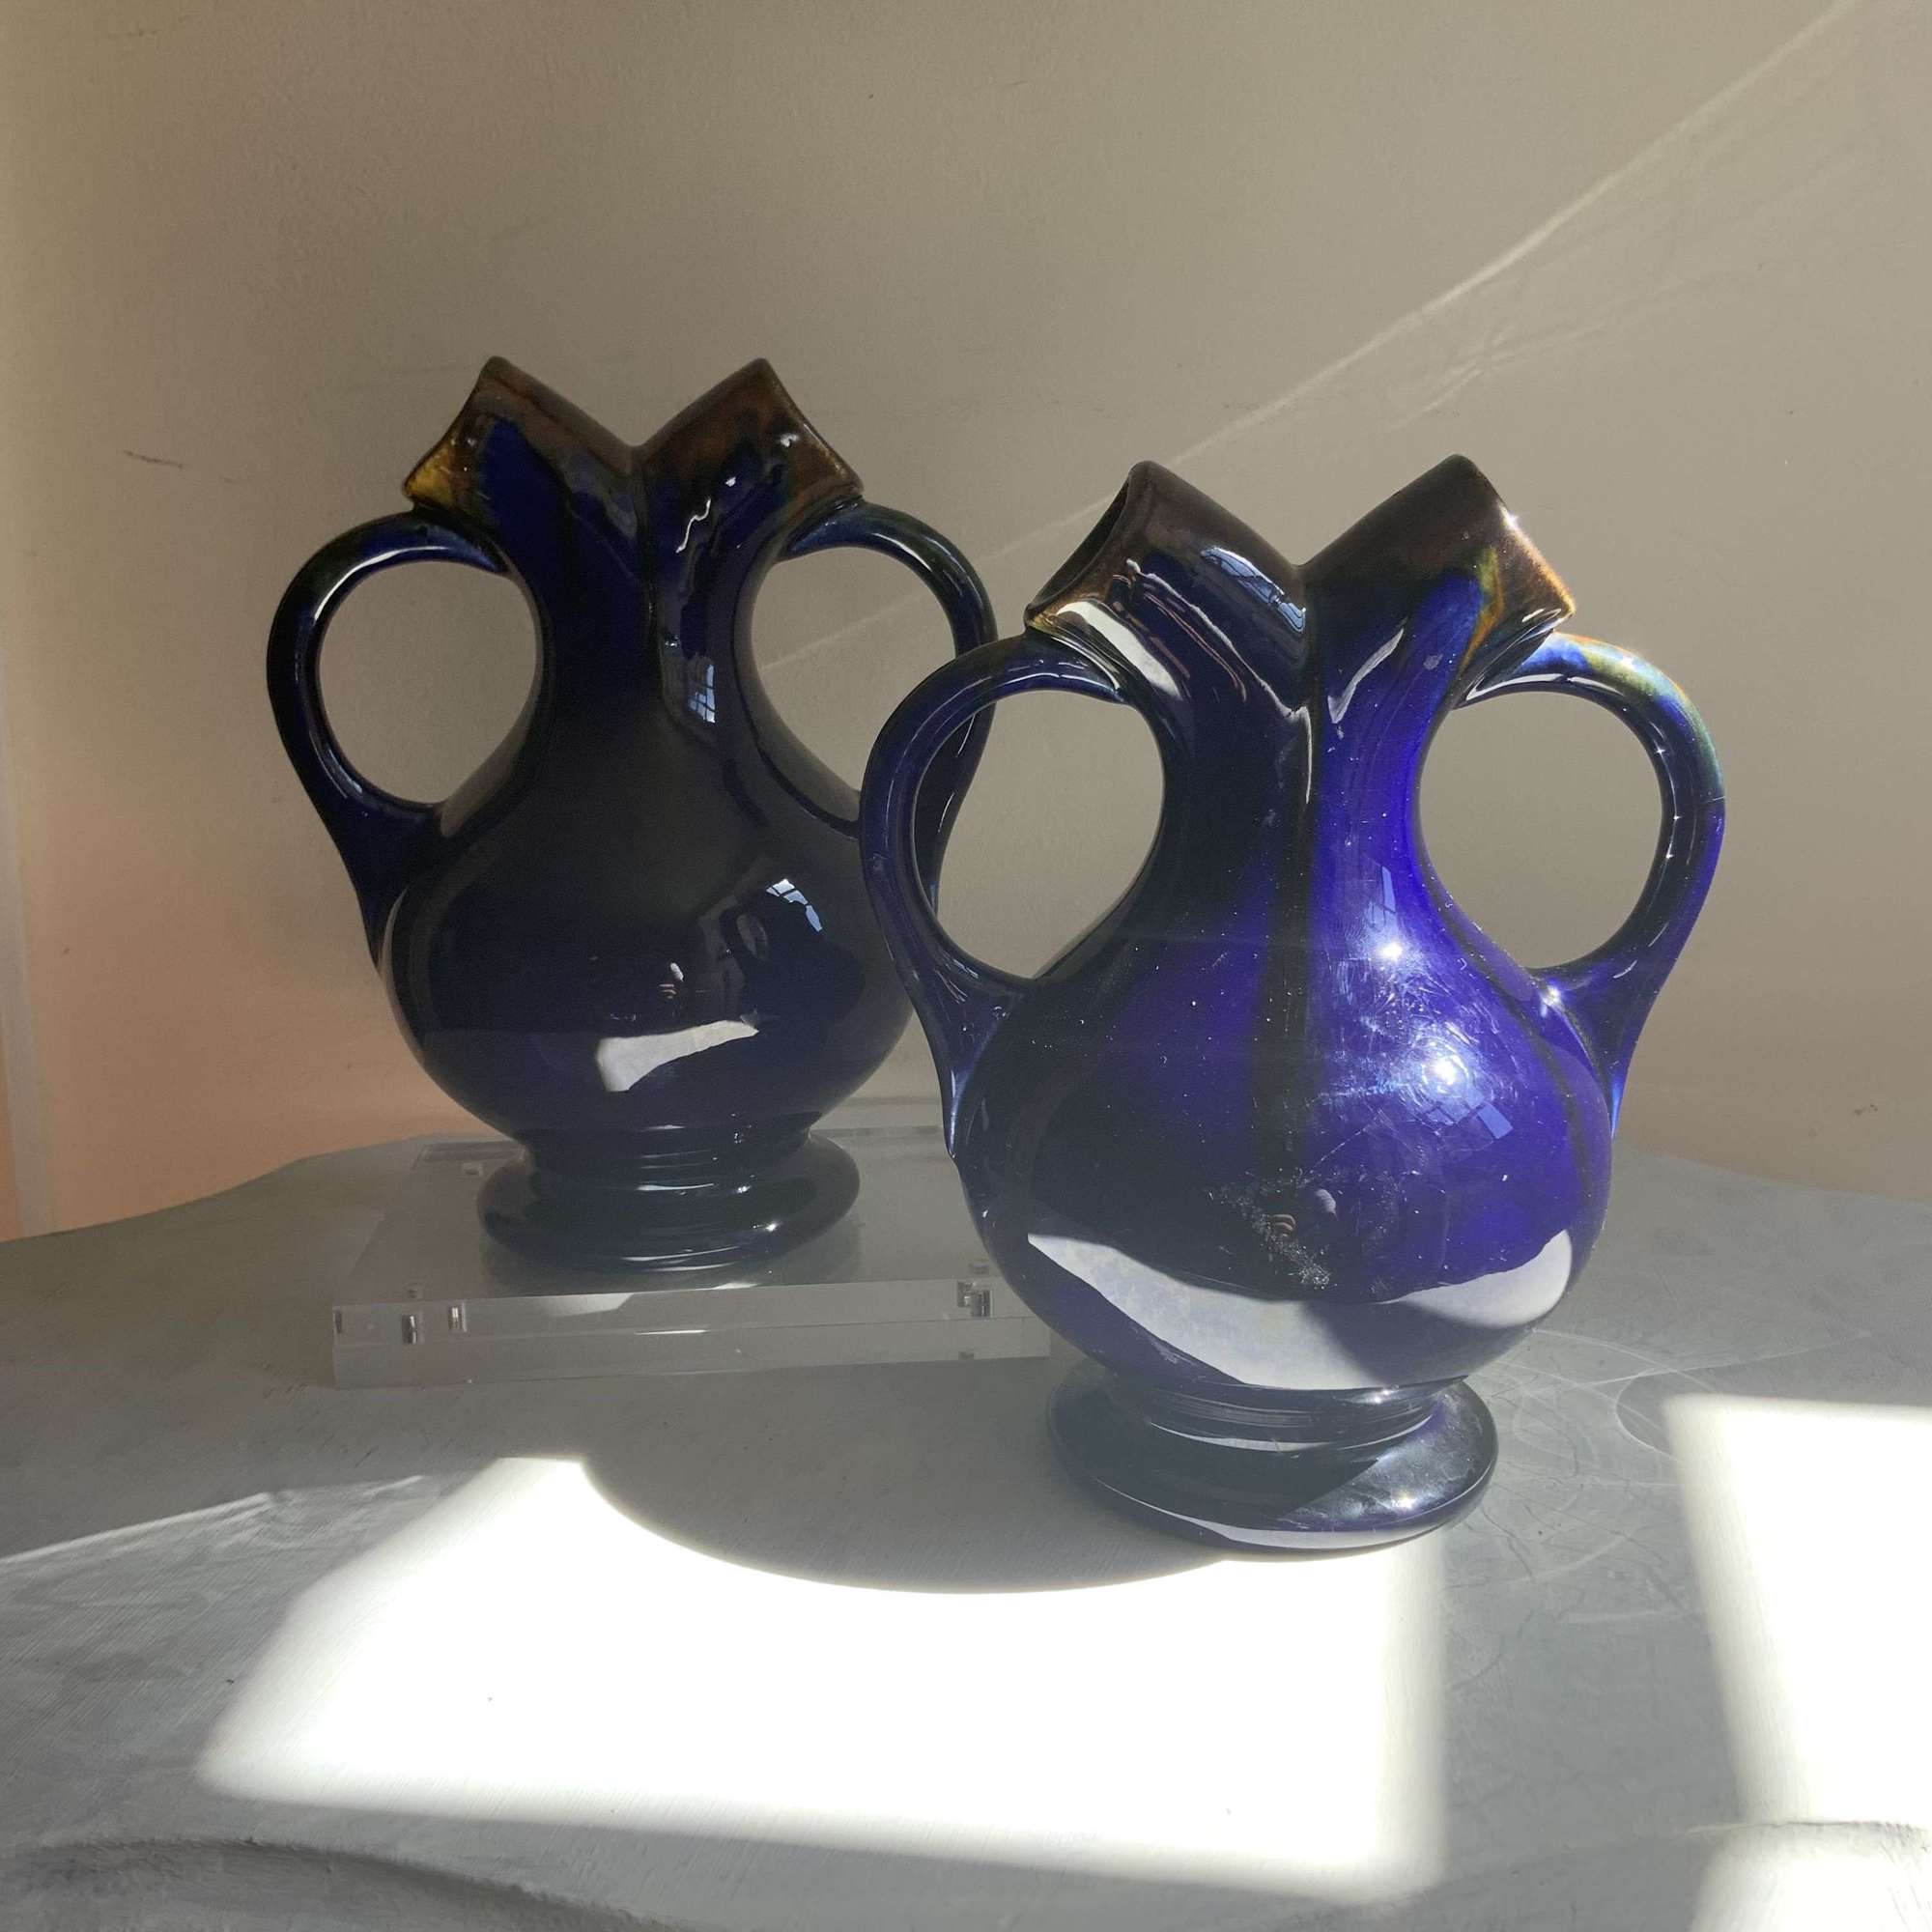 Faïencerie de Thulin ‘Wedding Vases’ cobalt blue and brown drip-glaze